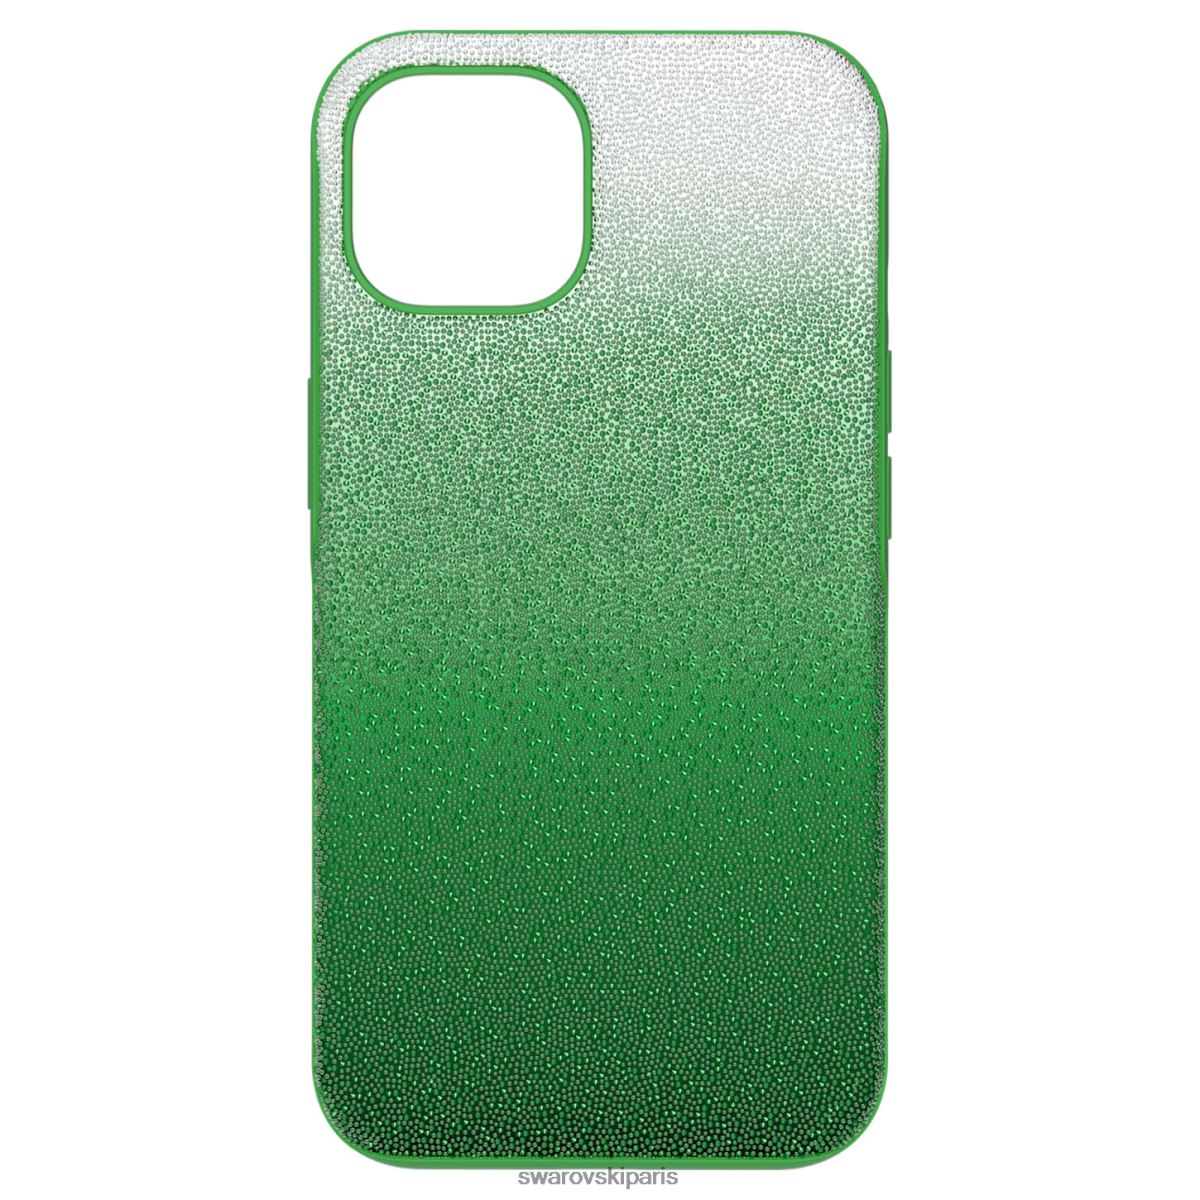 accessoires Swarovski coque haute pour smartphone vert RZD0XJ1377